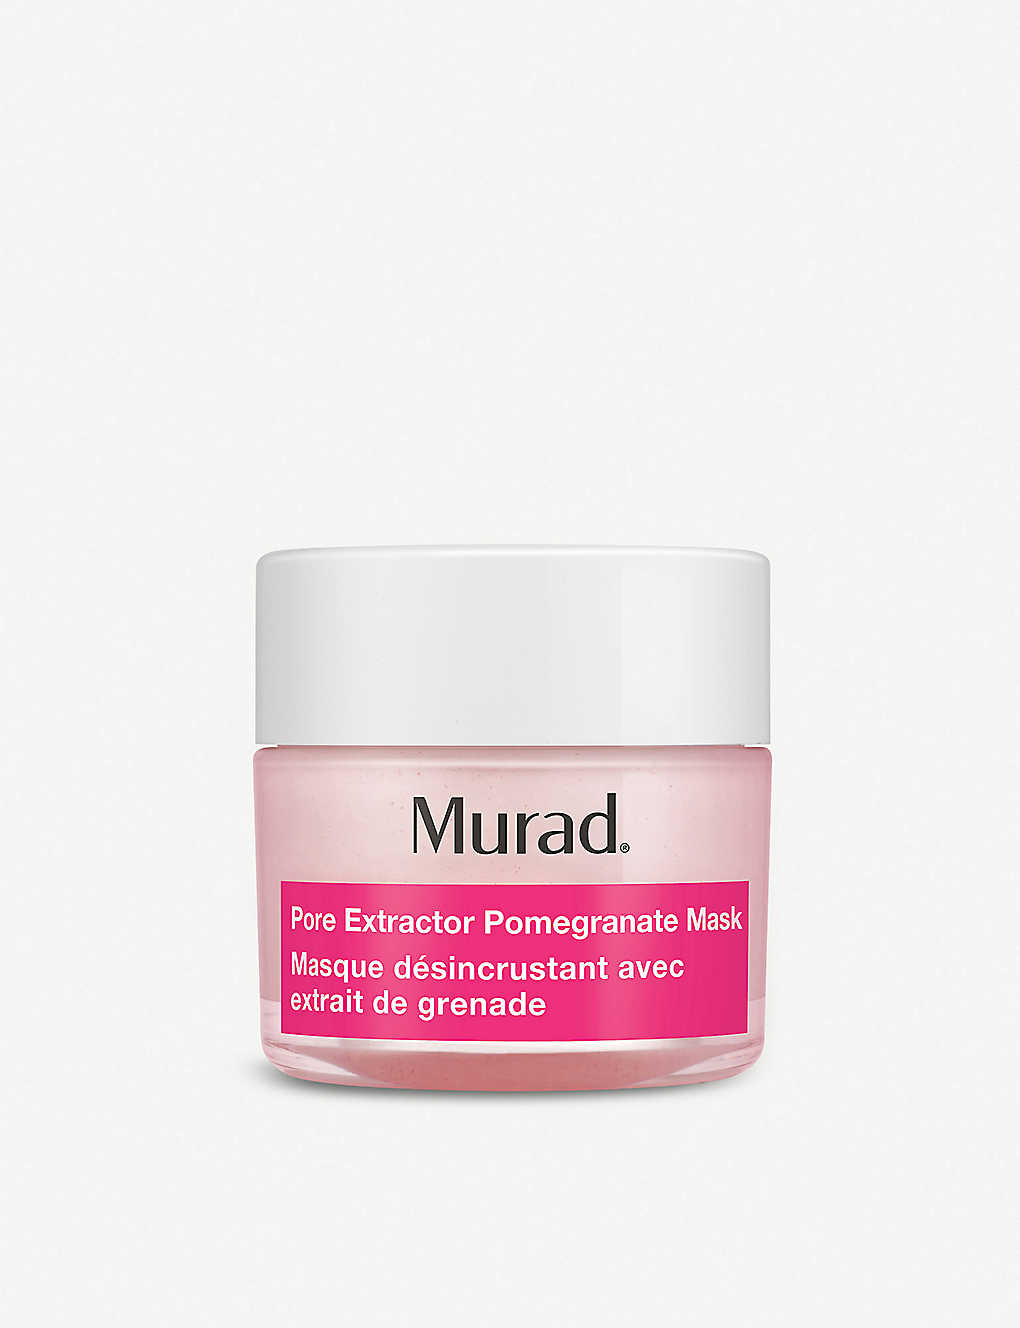 Tag væk blad Stort univers MURAD - Pore Extractor Pomegranate Mask 50ml | Selfridges.com